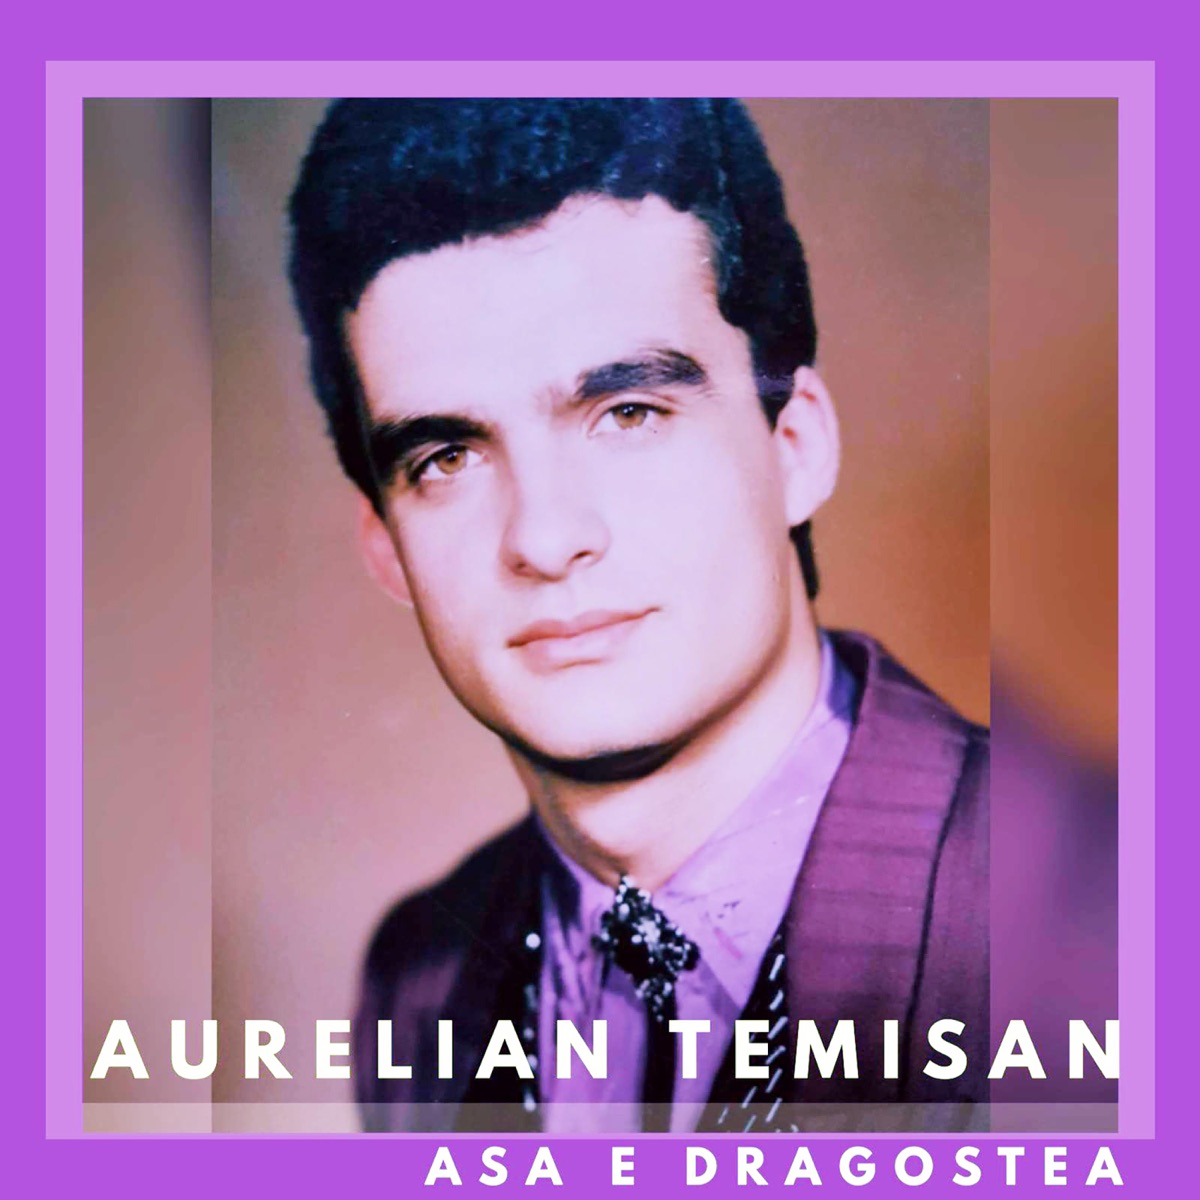 Of, Ce Doare! - Single by Aurelian Temisan on Apple Music